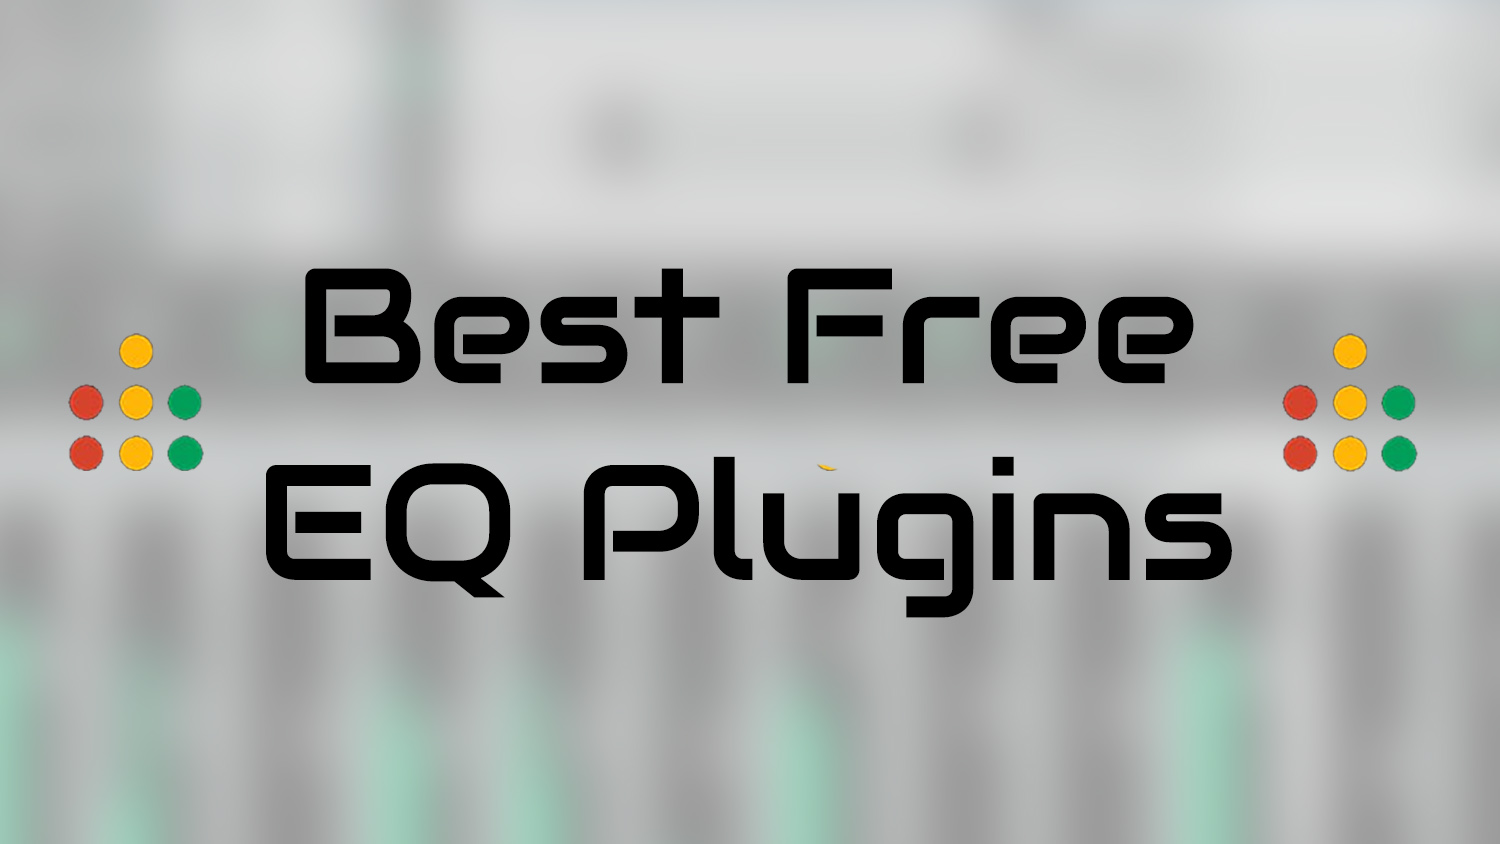 best free eq plugins